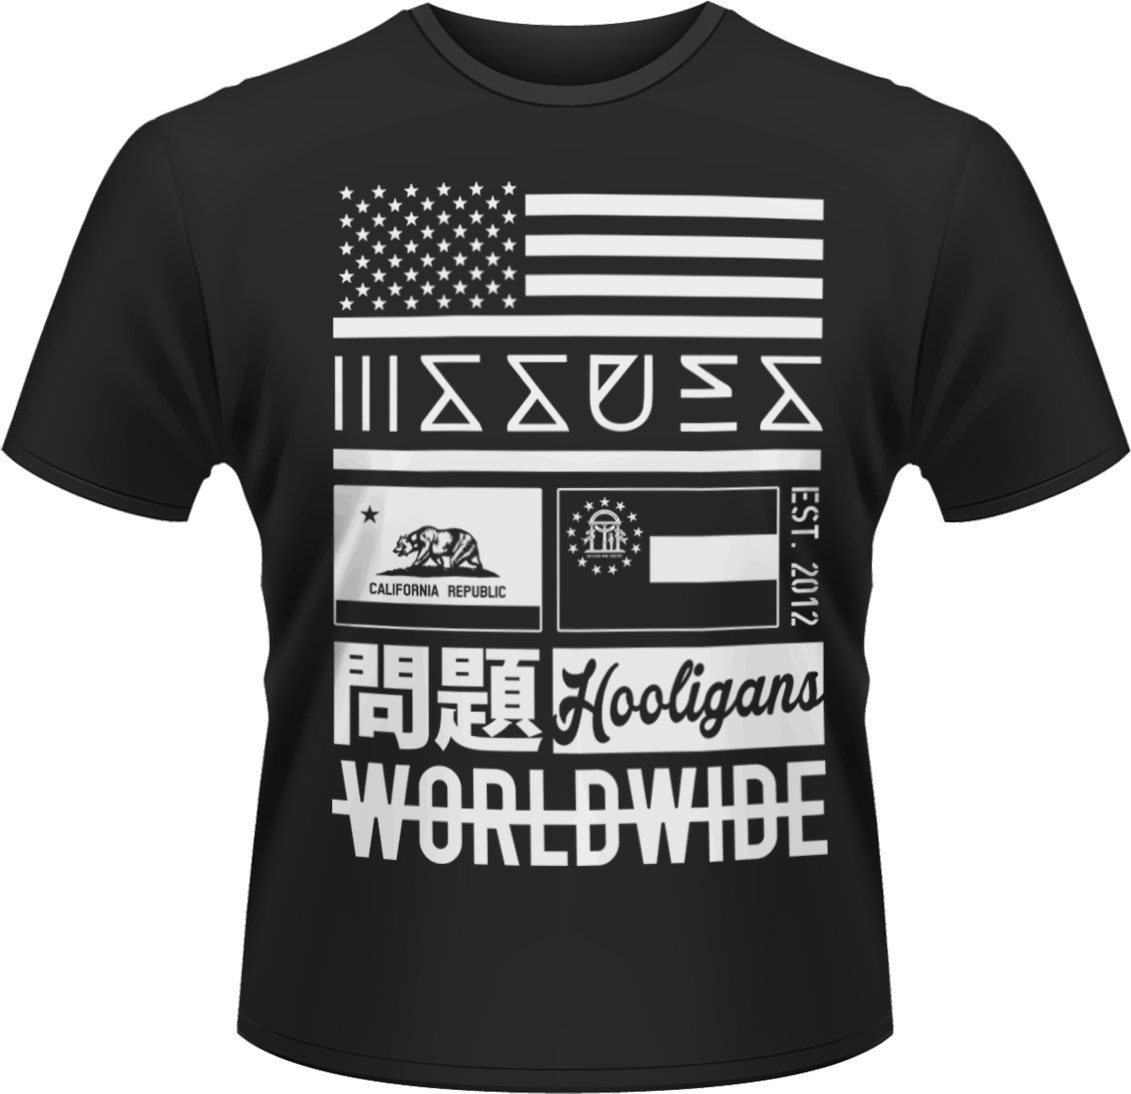 T-Shirt Issues T-Shirt Worldwide Black M